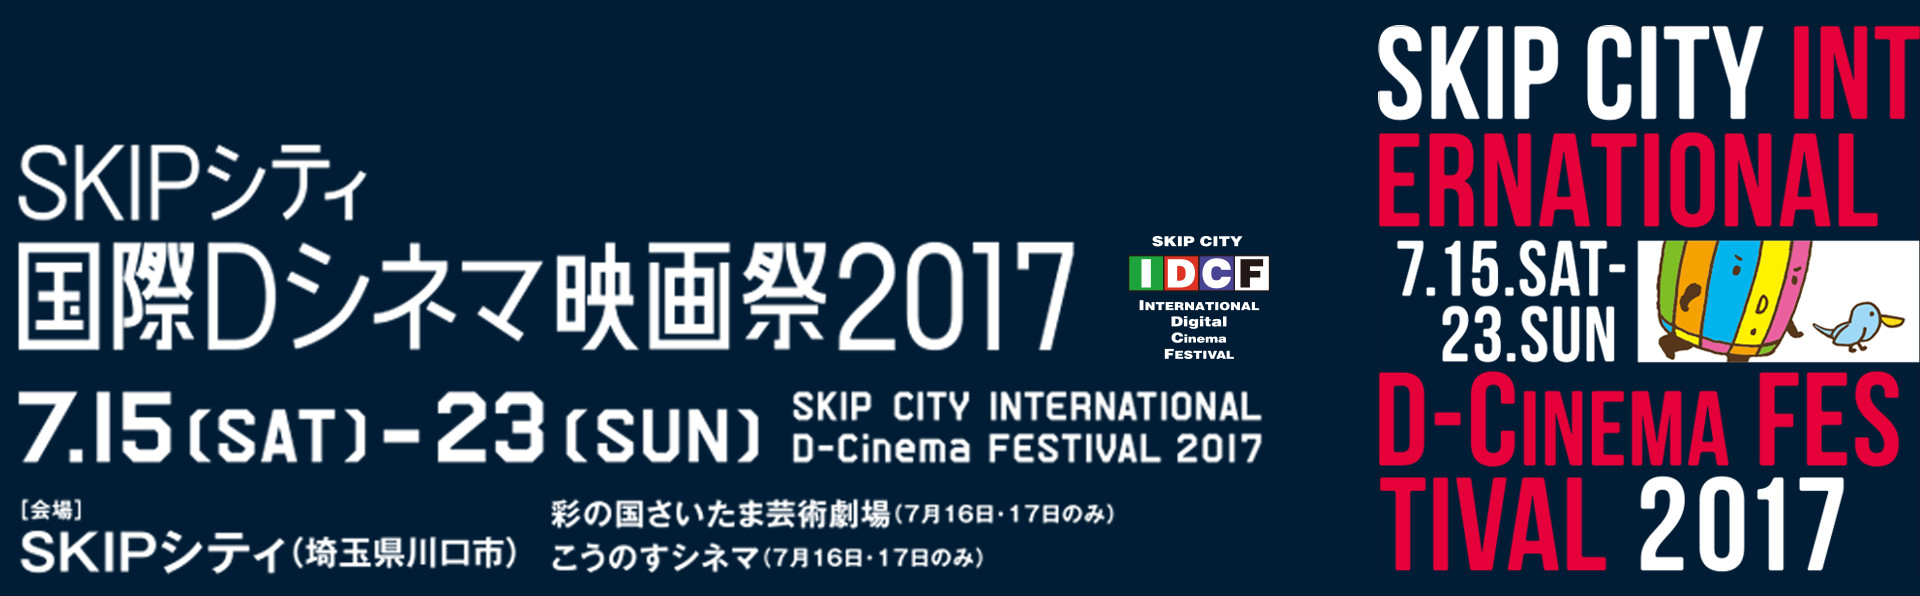 SKIPシティ国際Dシネマ映画祭2017